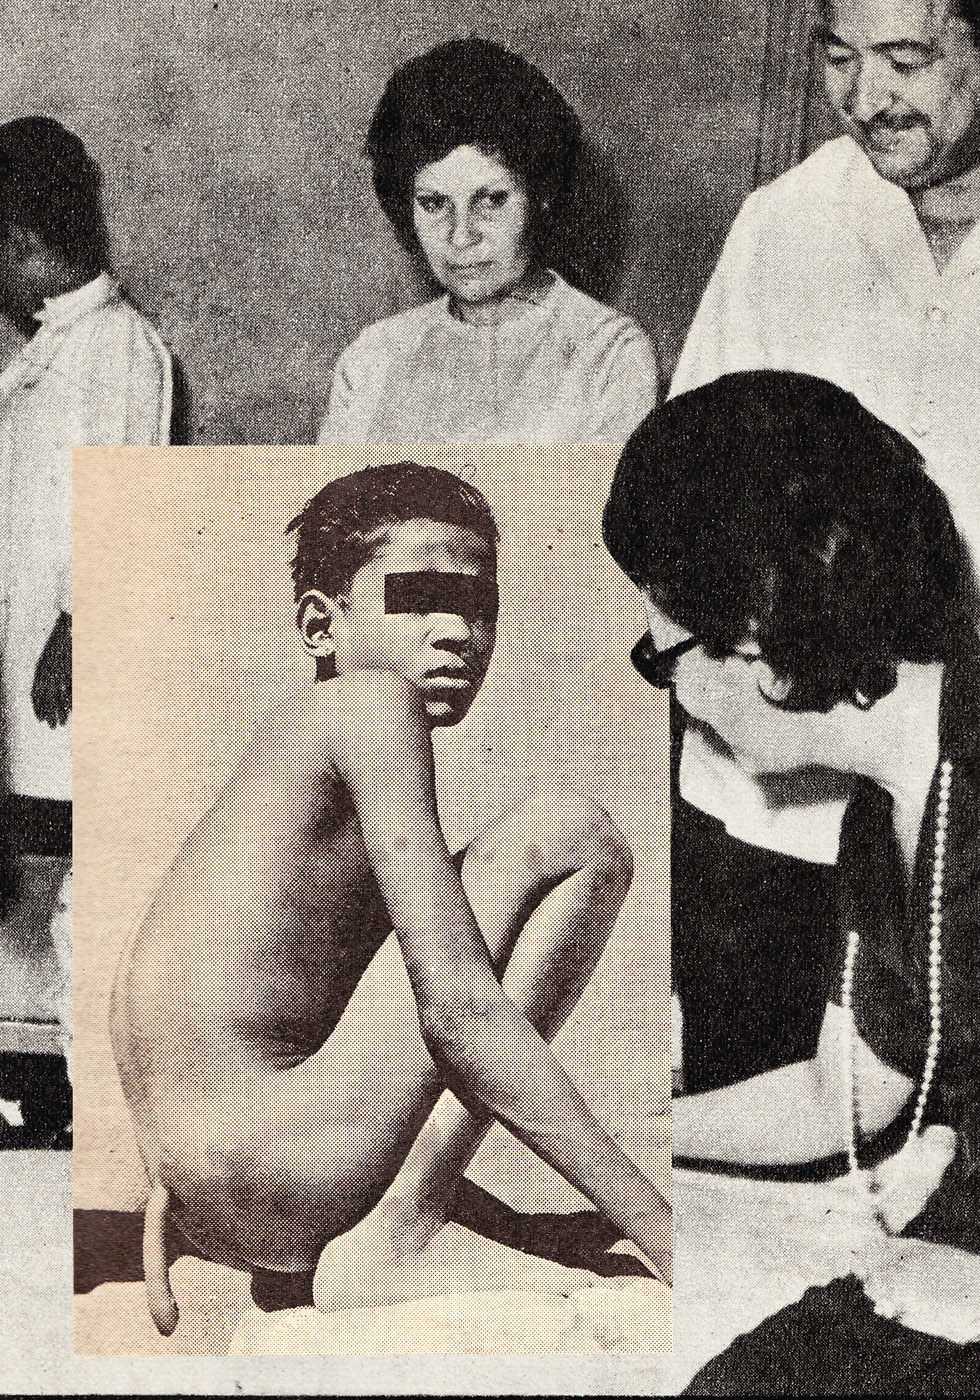 Arsheef Archive collage vintage old newspaper magazine sex Arab culture Pop Art 70s 60s revolution warsheh